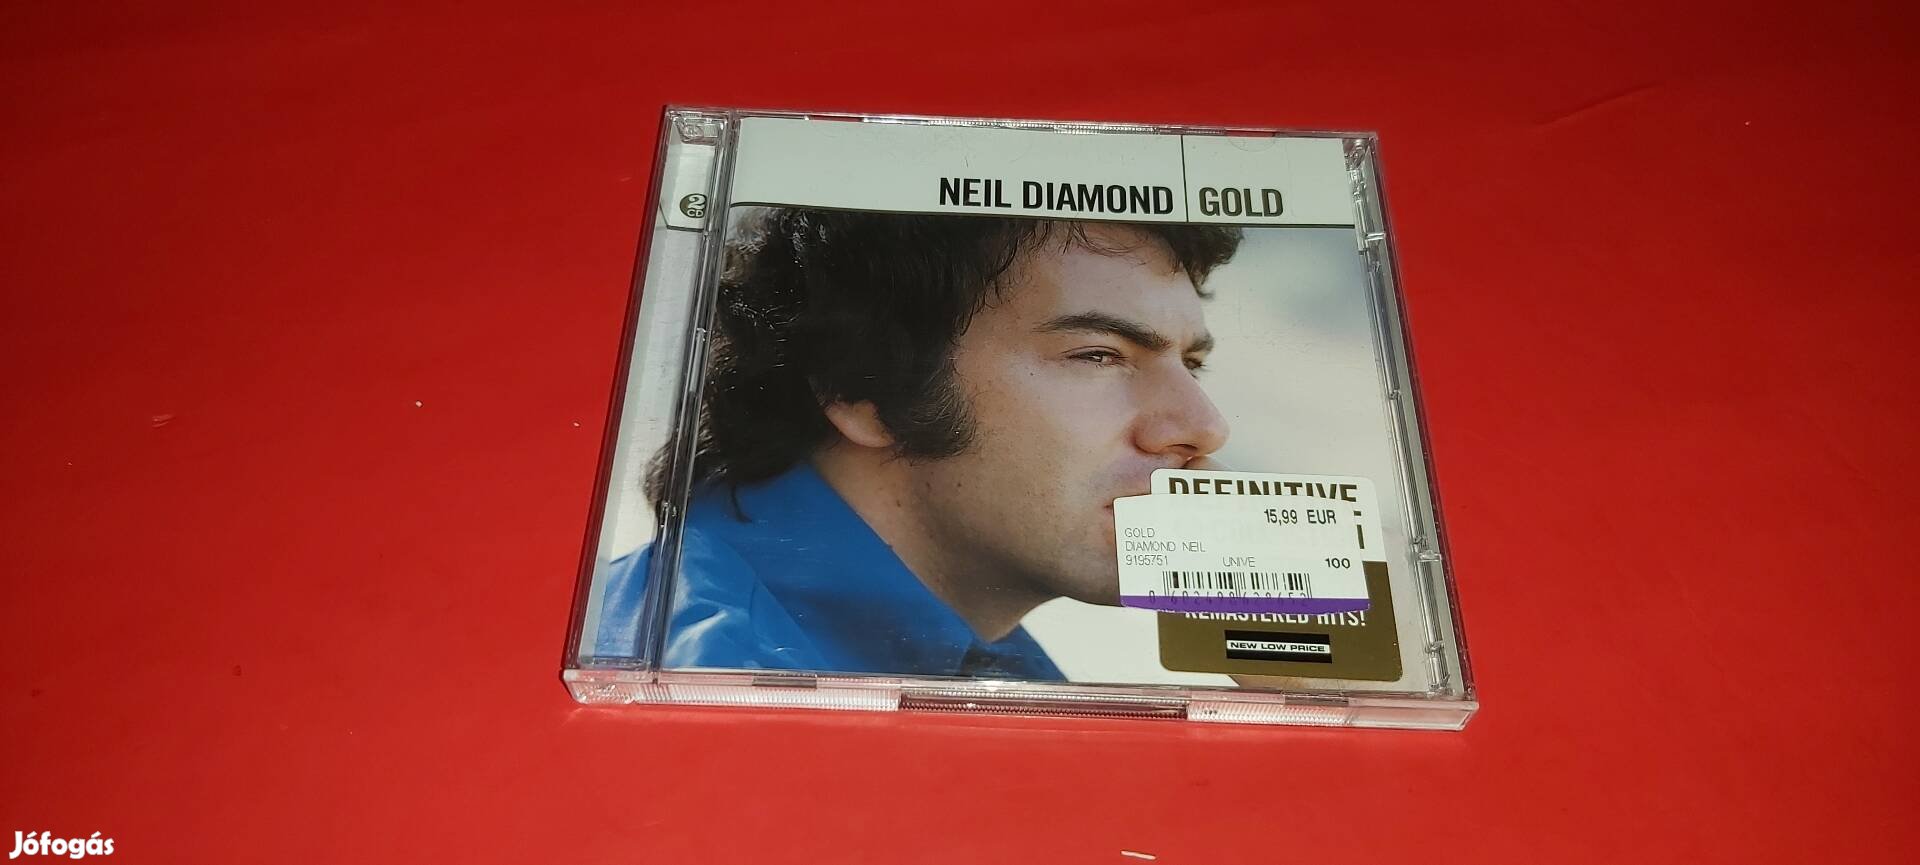 Neil Diamond Gold dupla Cd 2005